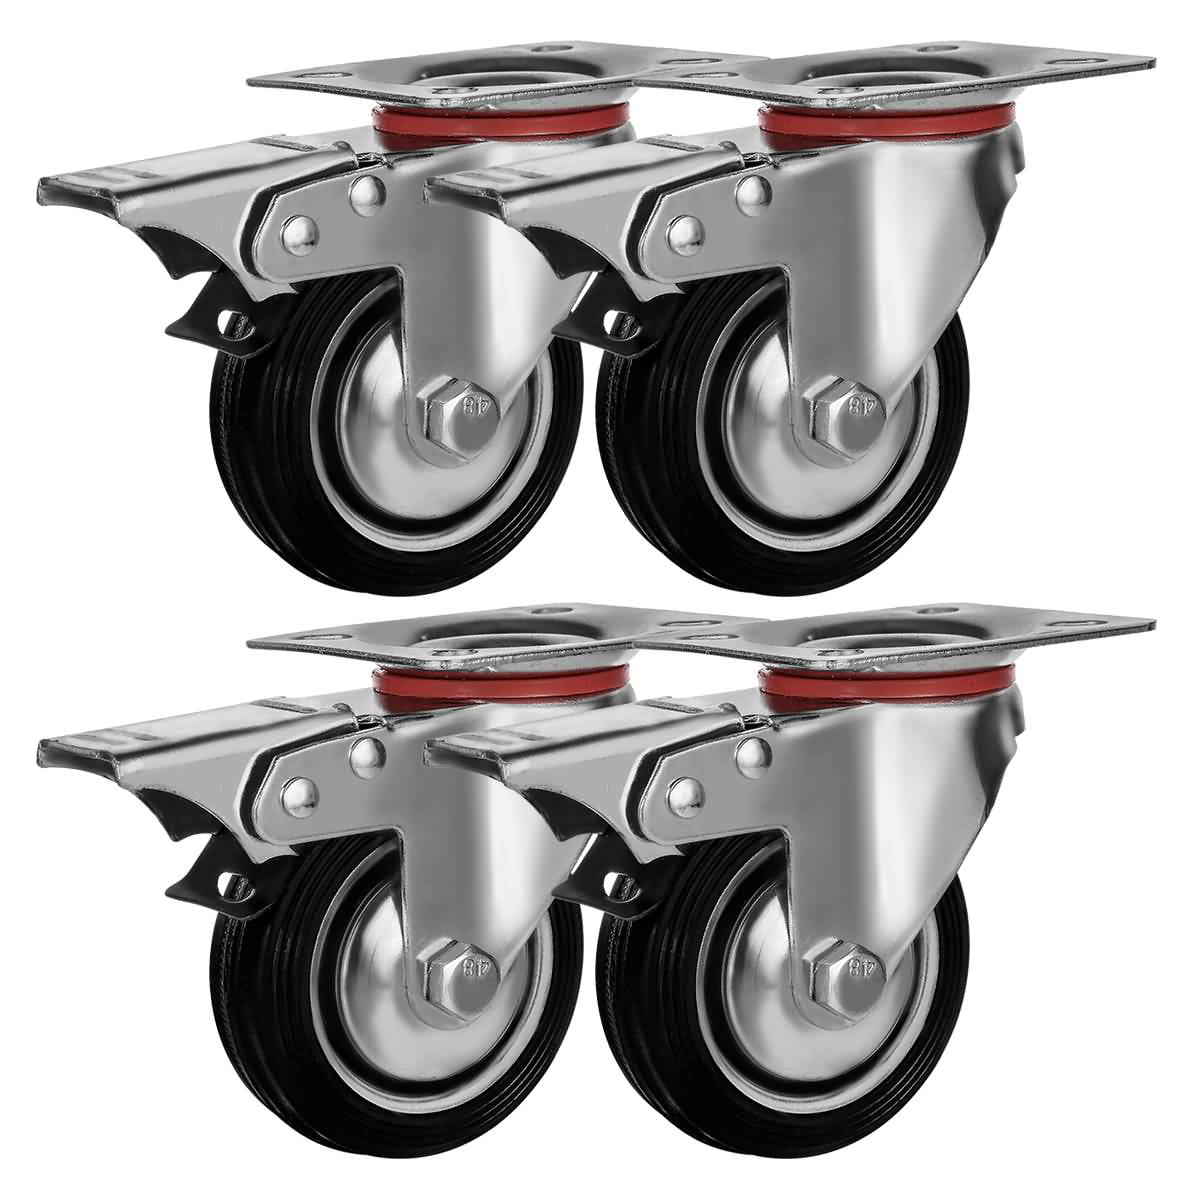 4 Heavy Duty Caster Set 4" Wheels 4 Swivel 2 with Brake Non Skid No Mark Casters 